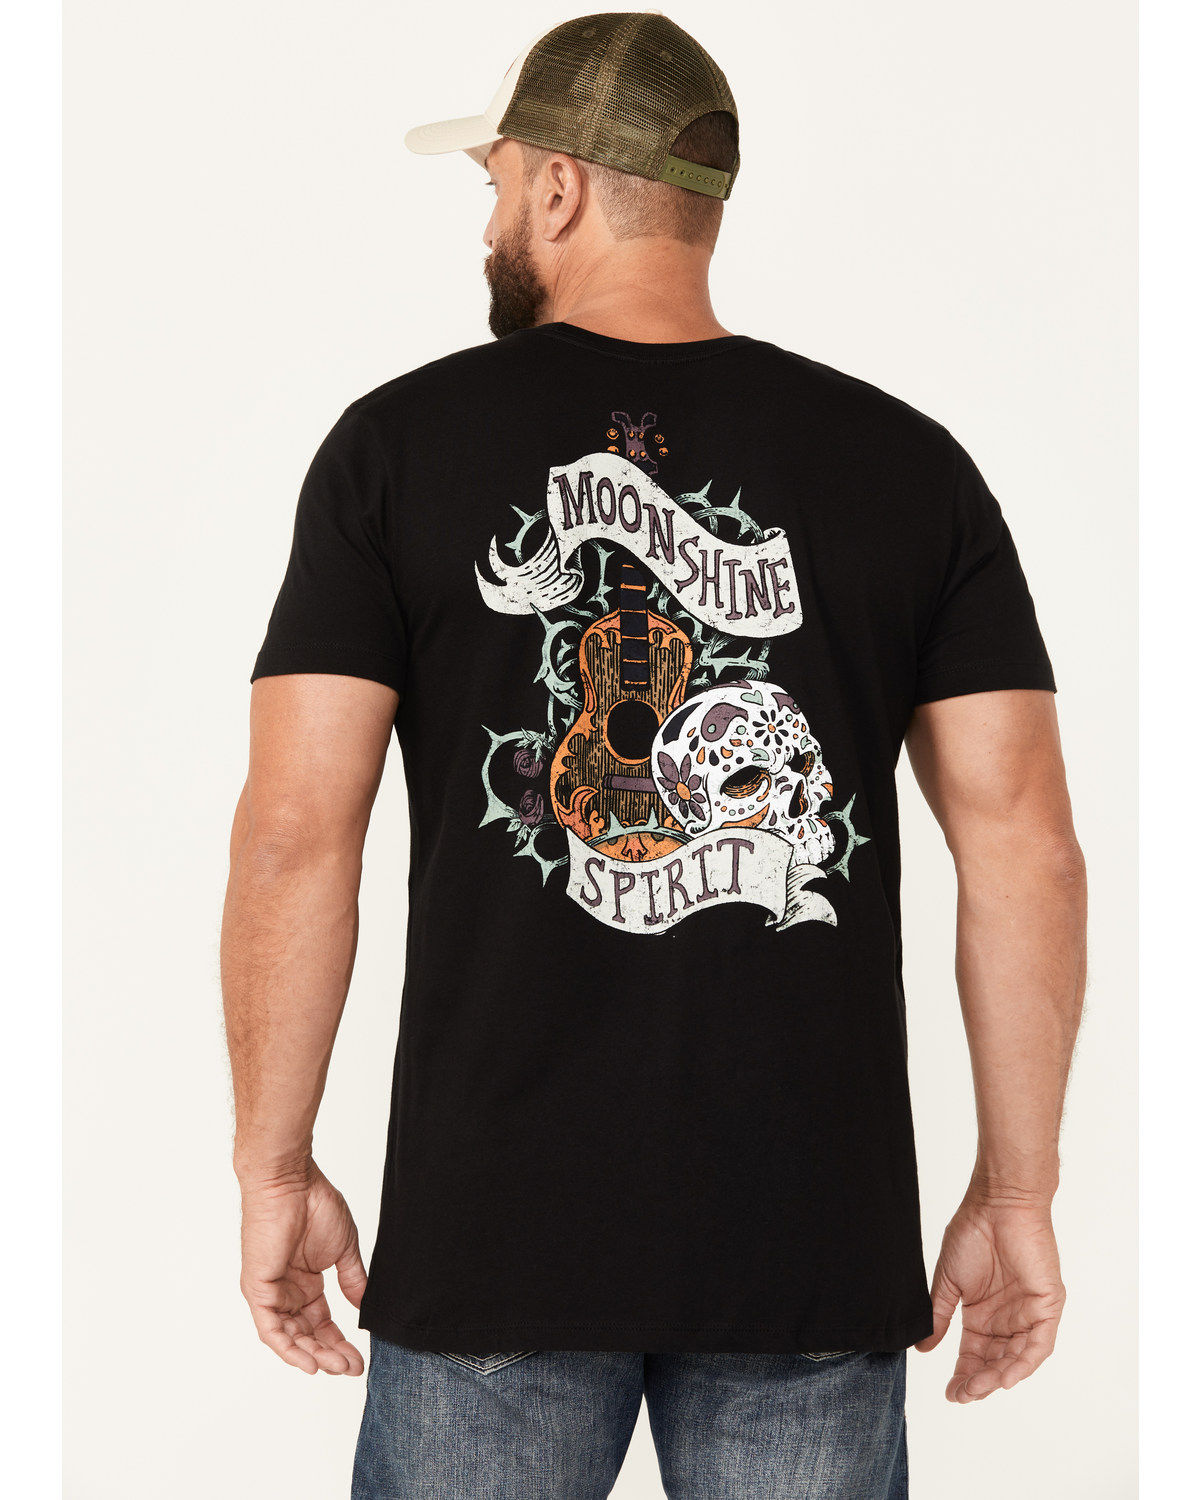 Moonshine Spirit Men's Guitar Short Sleeve Graphic T-Shirt